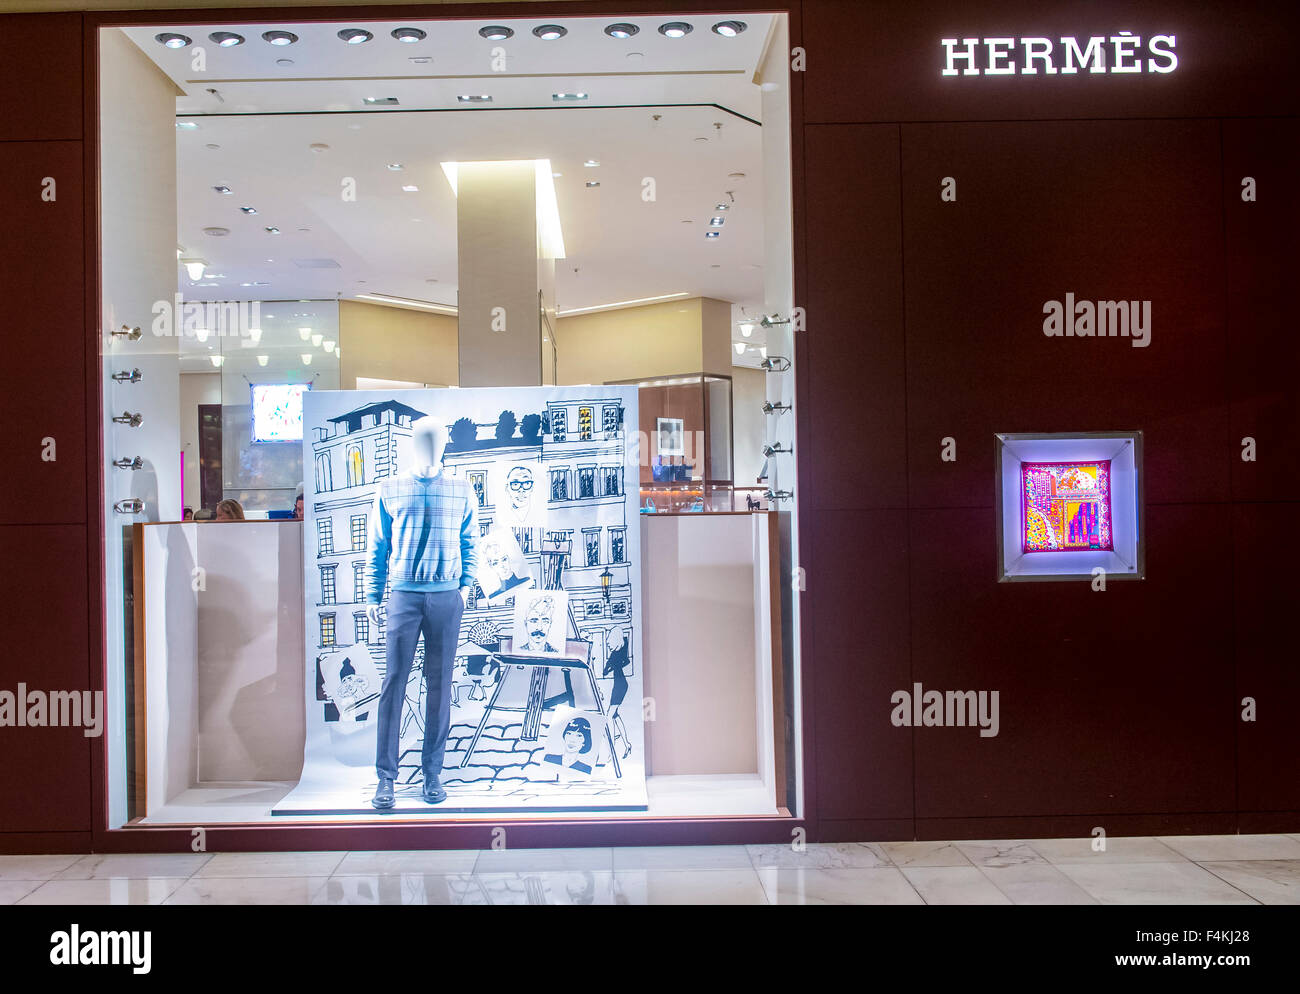 Ein Hermes-Shop in Las Vegas strip Stockfotografie - Alamy